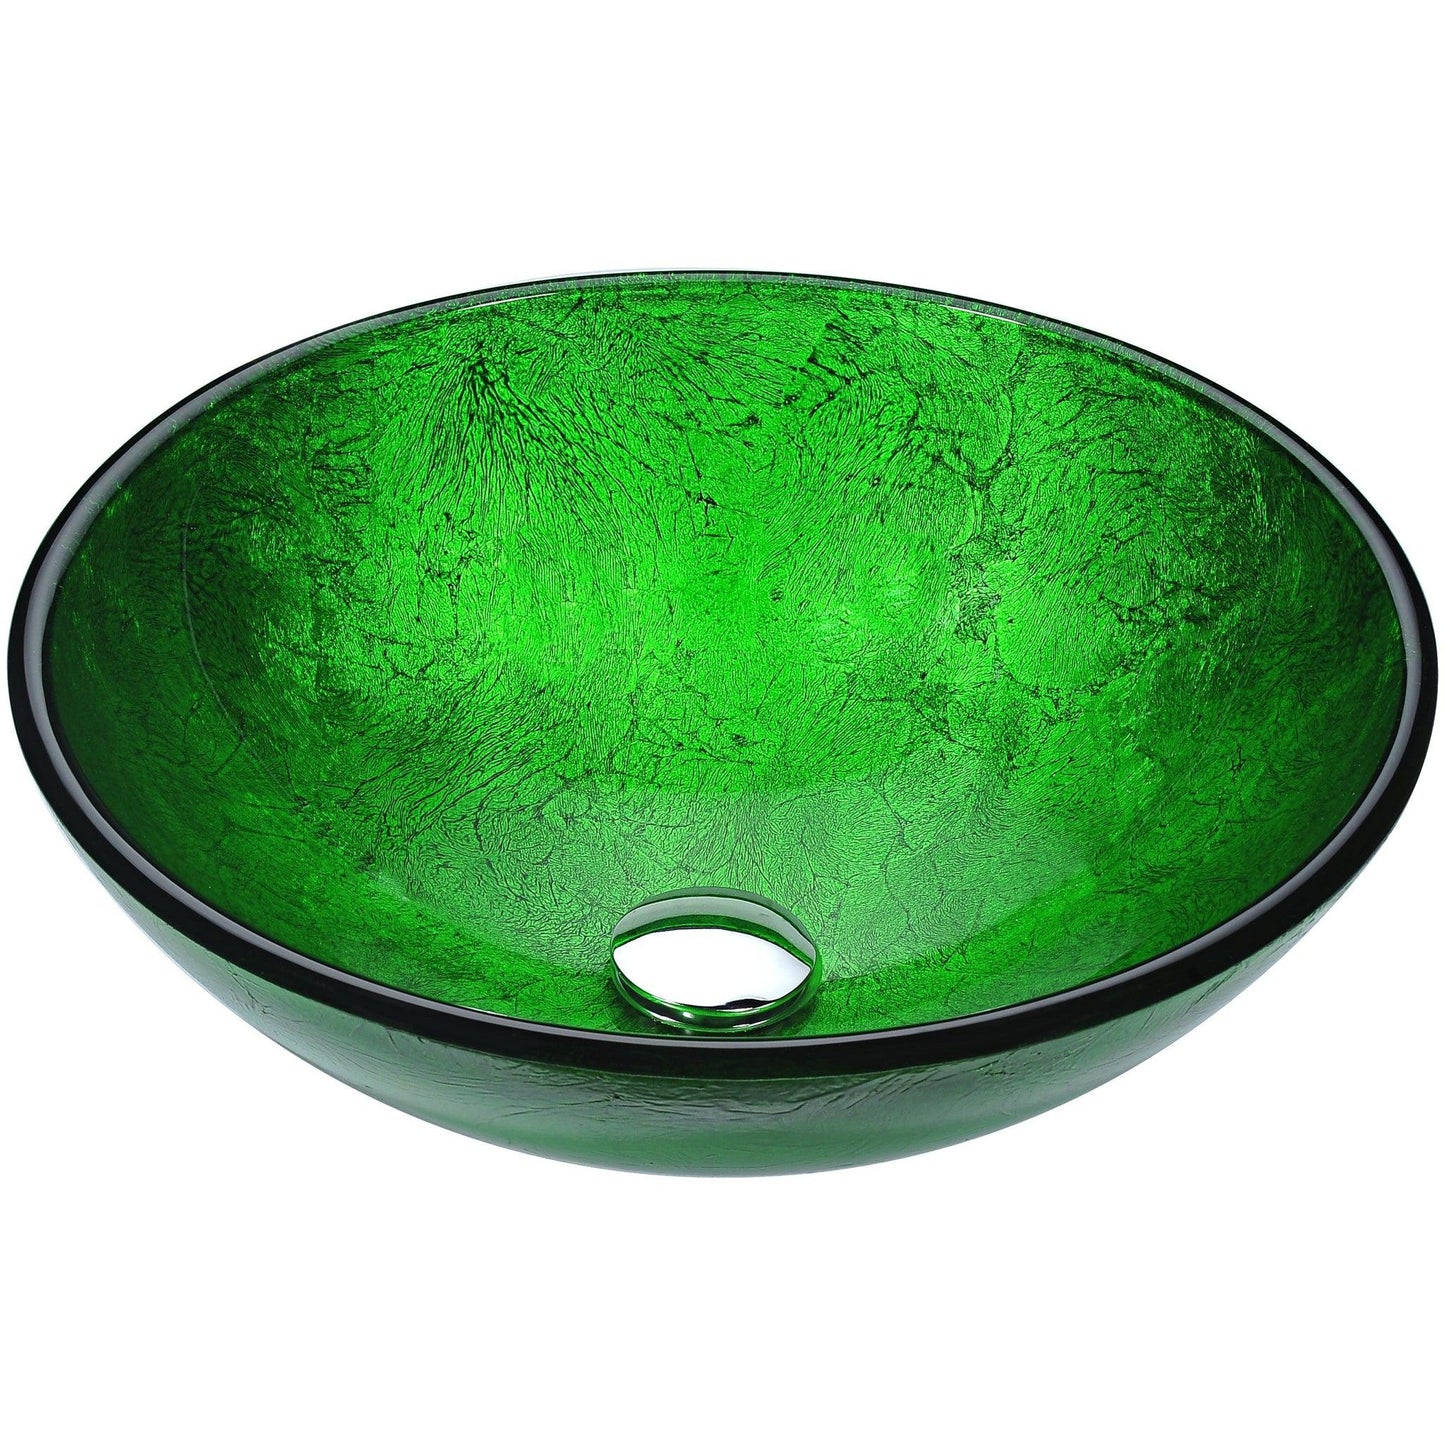 ANZZI Posh Series 17" x 17" Round Verdure Green Deco-Glass Vessel Sink With Polished Chrome Pop-Up Drain